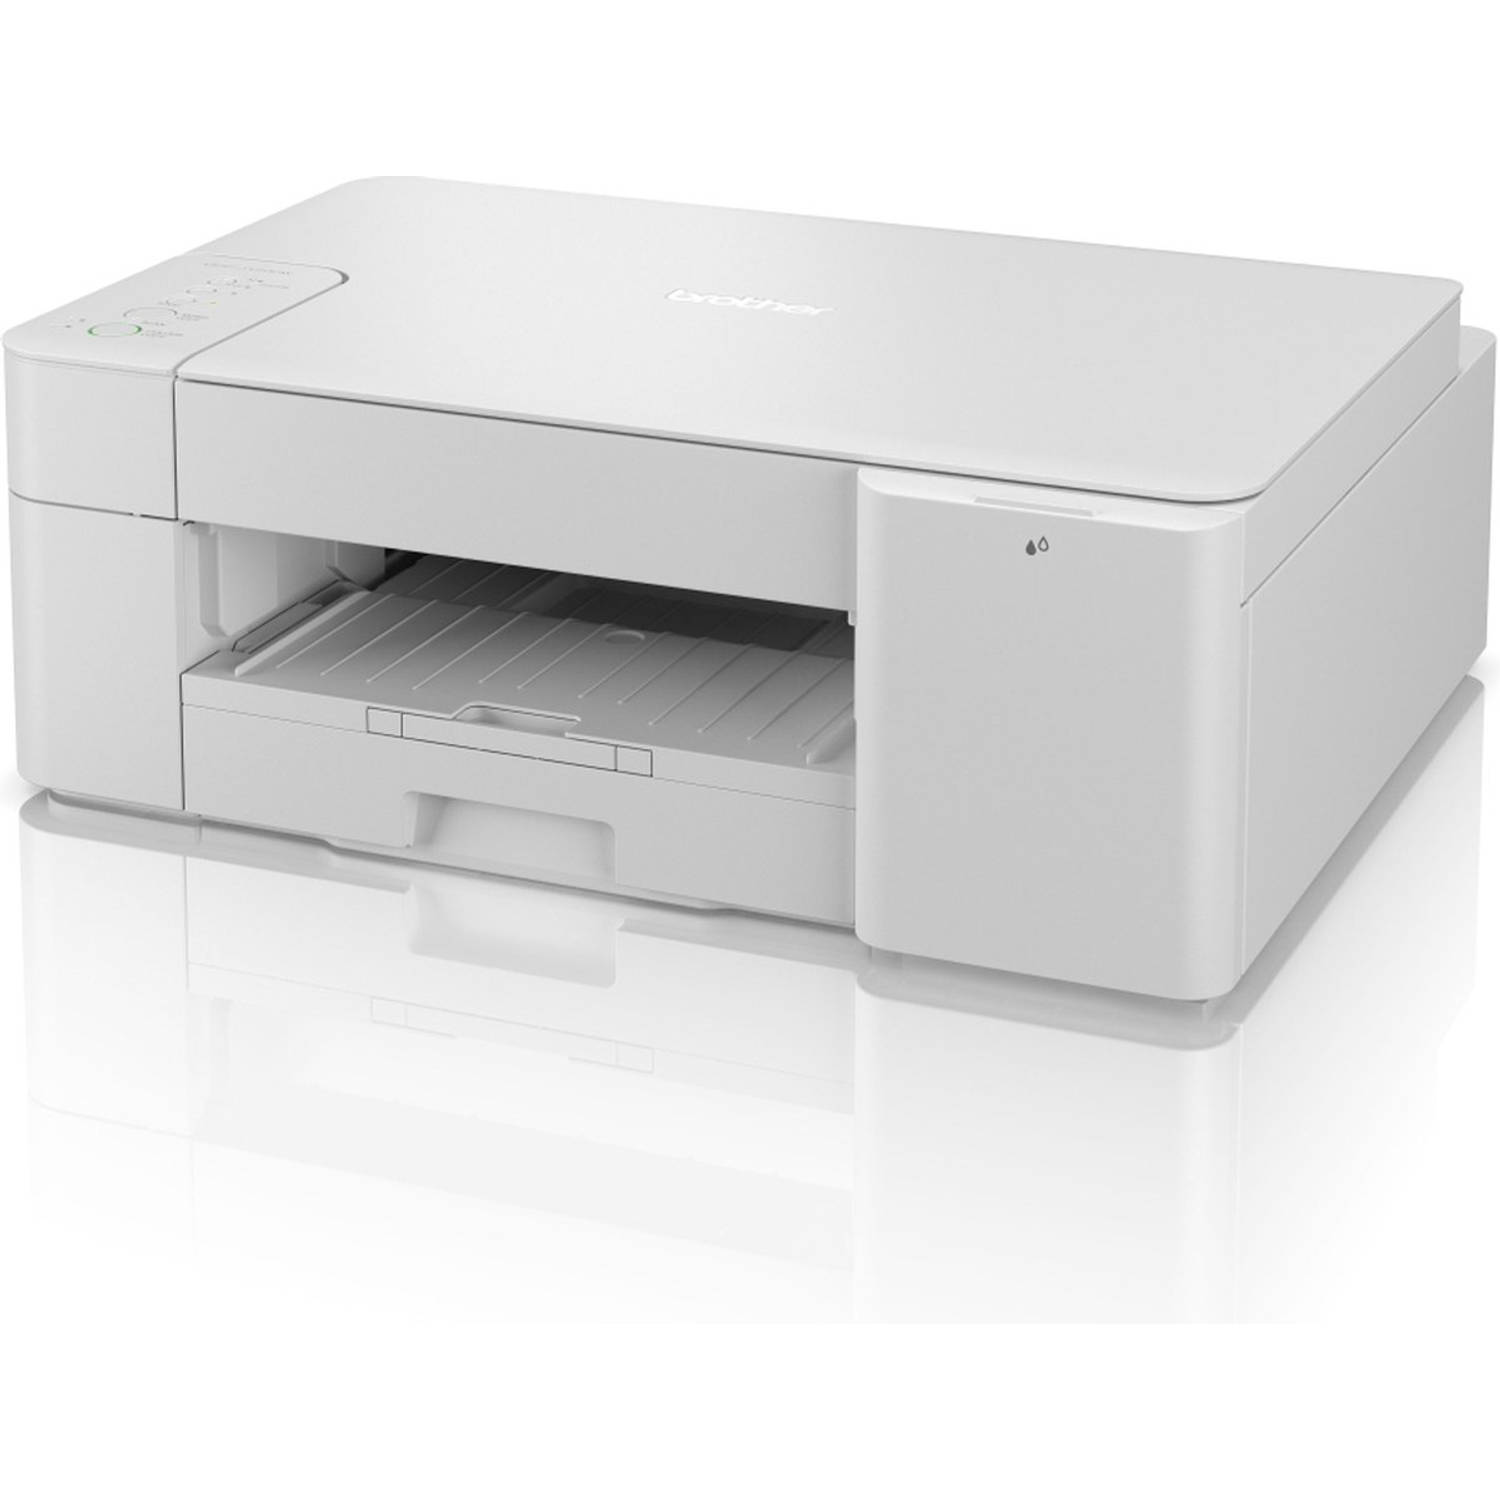 Brother DCP-J1200W multifunctionele printer - wifi - kopieëren - scannen - wit